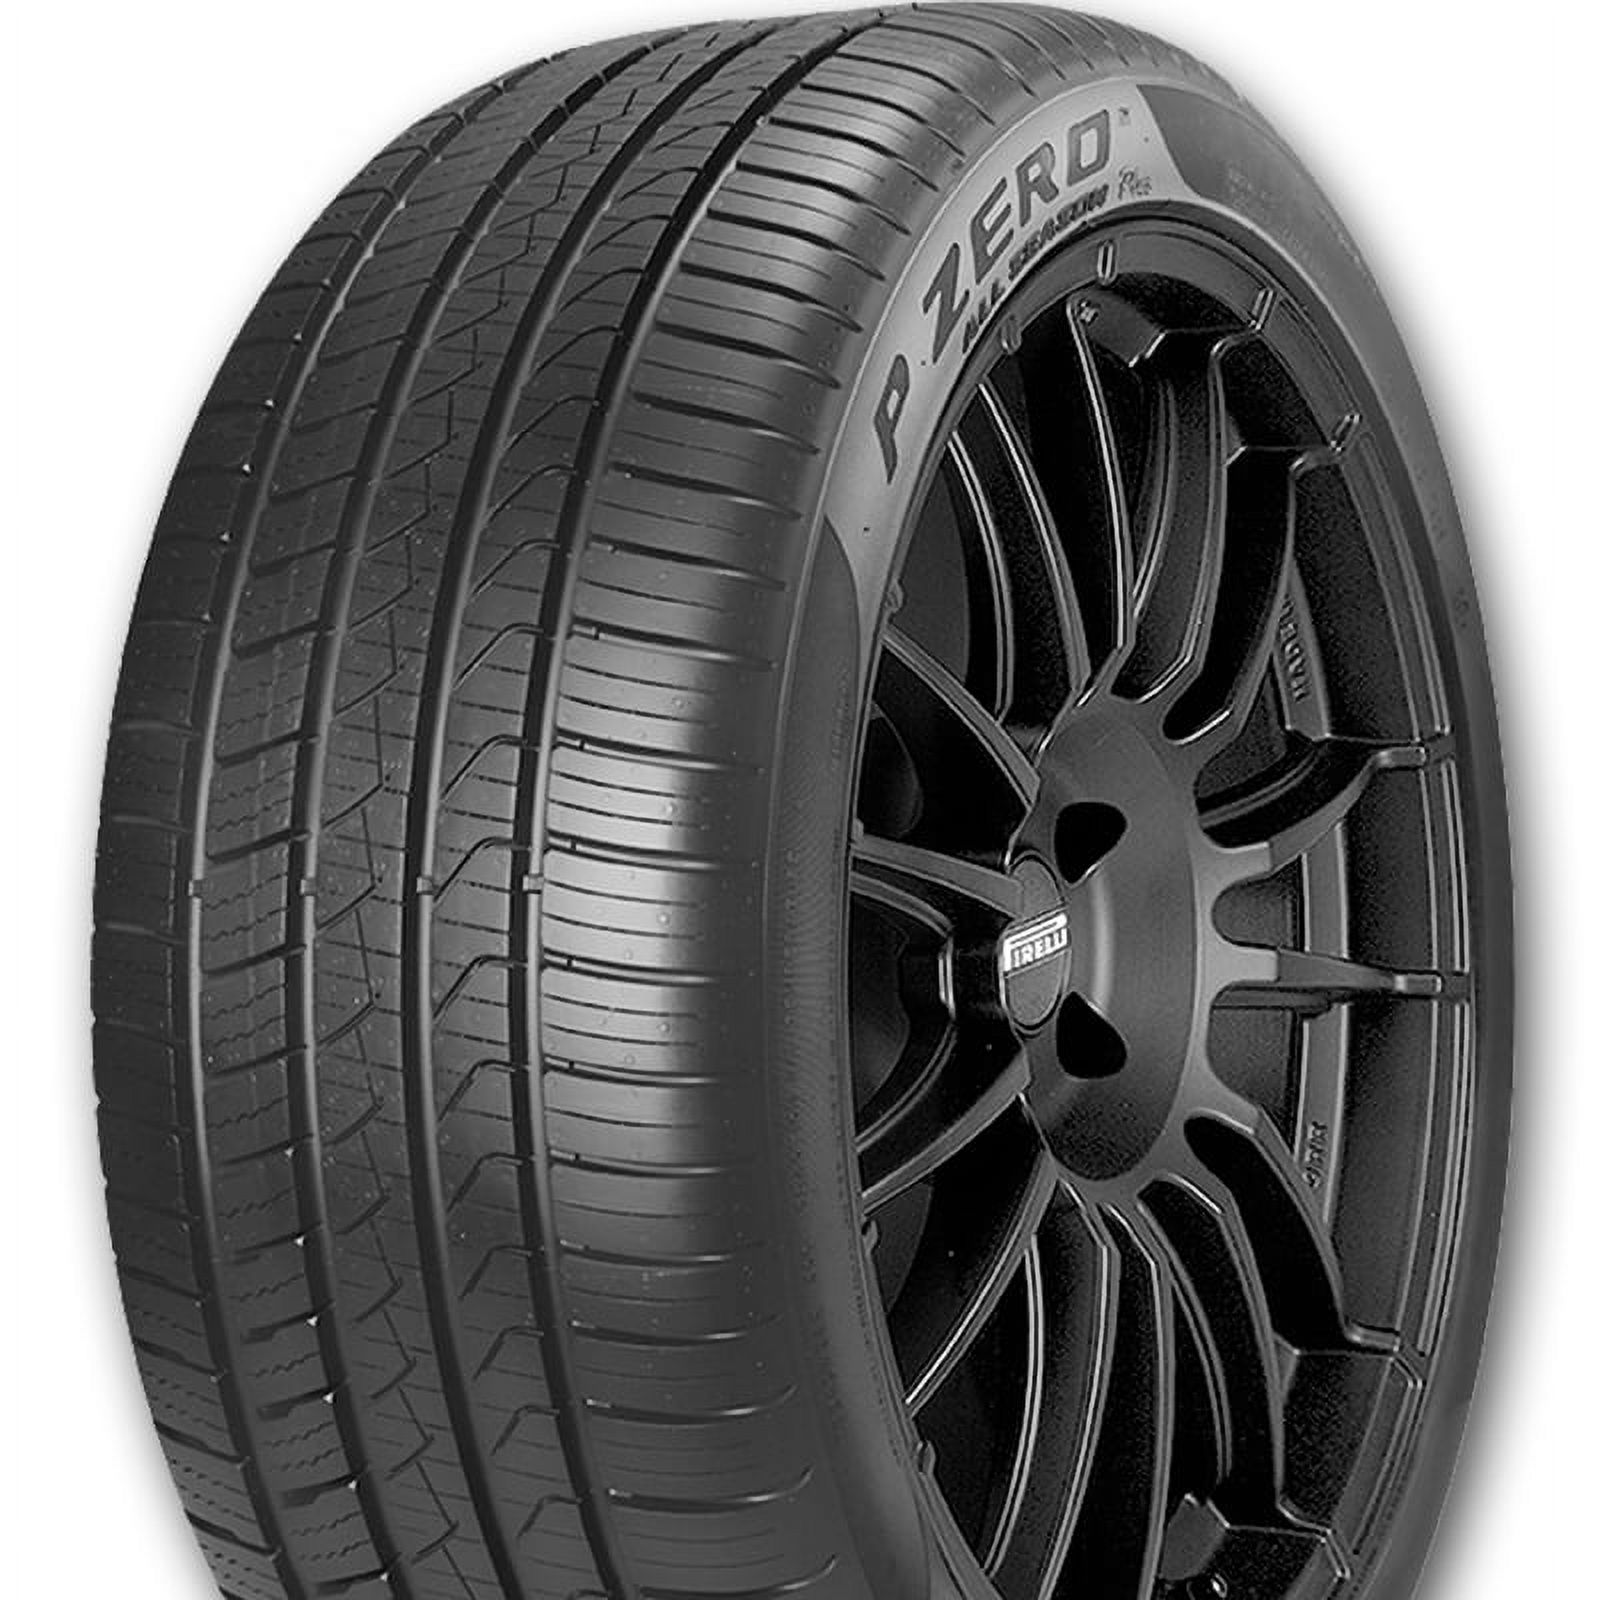 Pirelli P Zero All Season Plus UHP All Season 235/40R18 95Y XL Passenger Tire - image 2 of 3